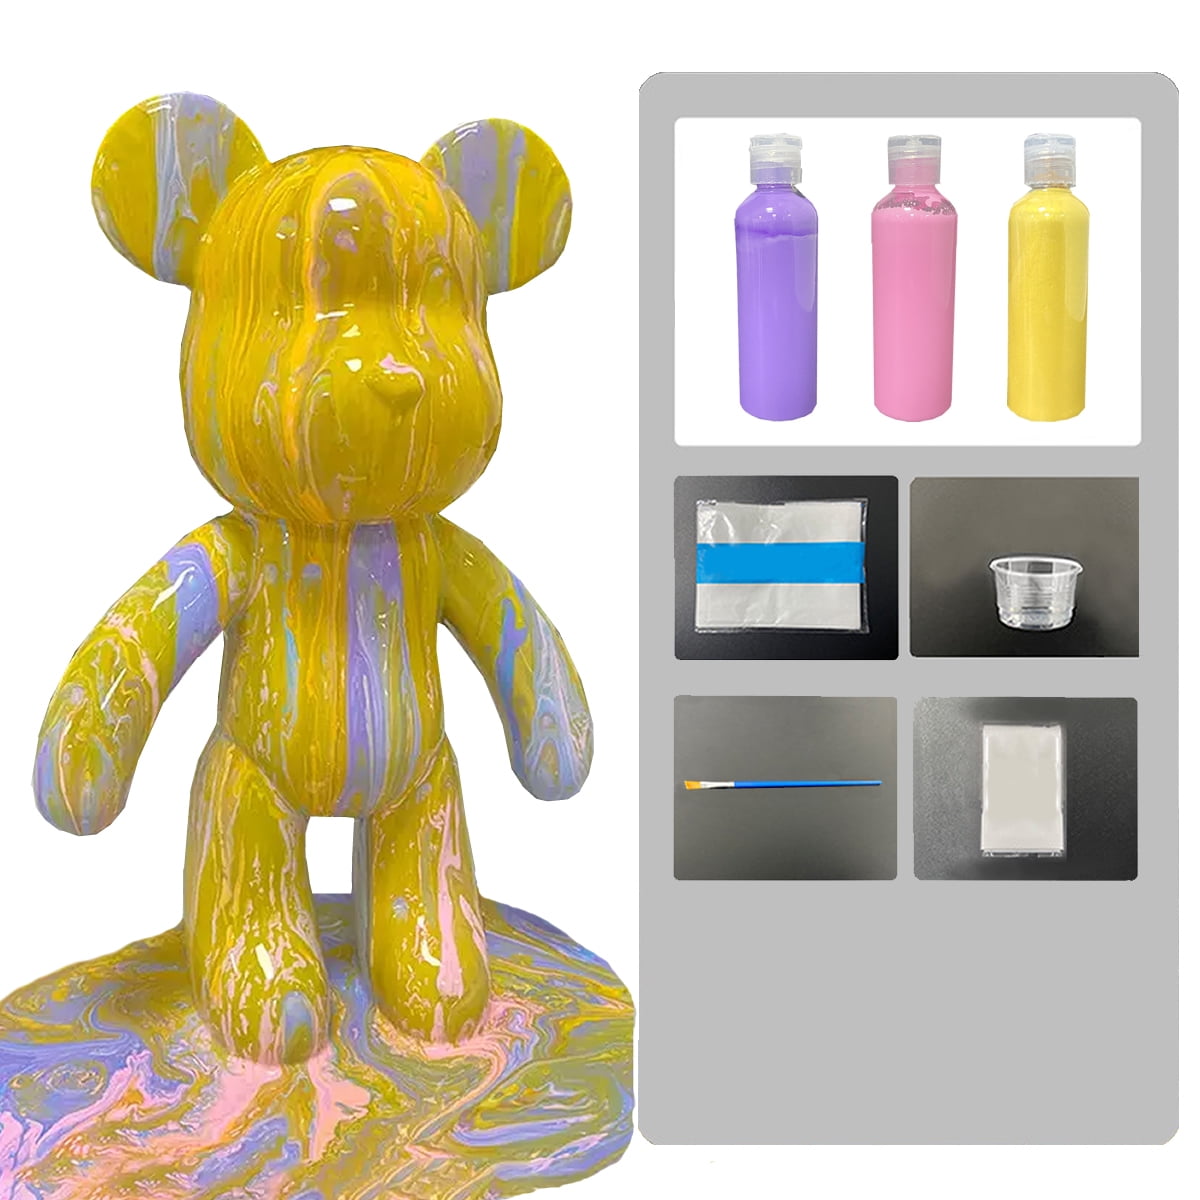 Puffy 1 fl oz 3D Paint Value Pack 20 Rainbow, Multi-Color